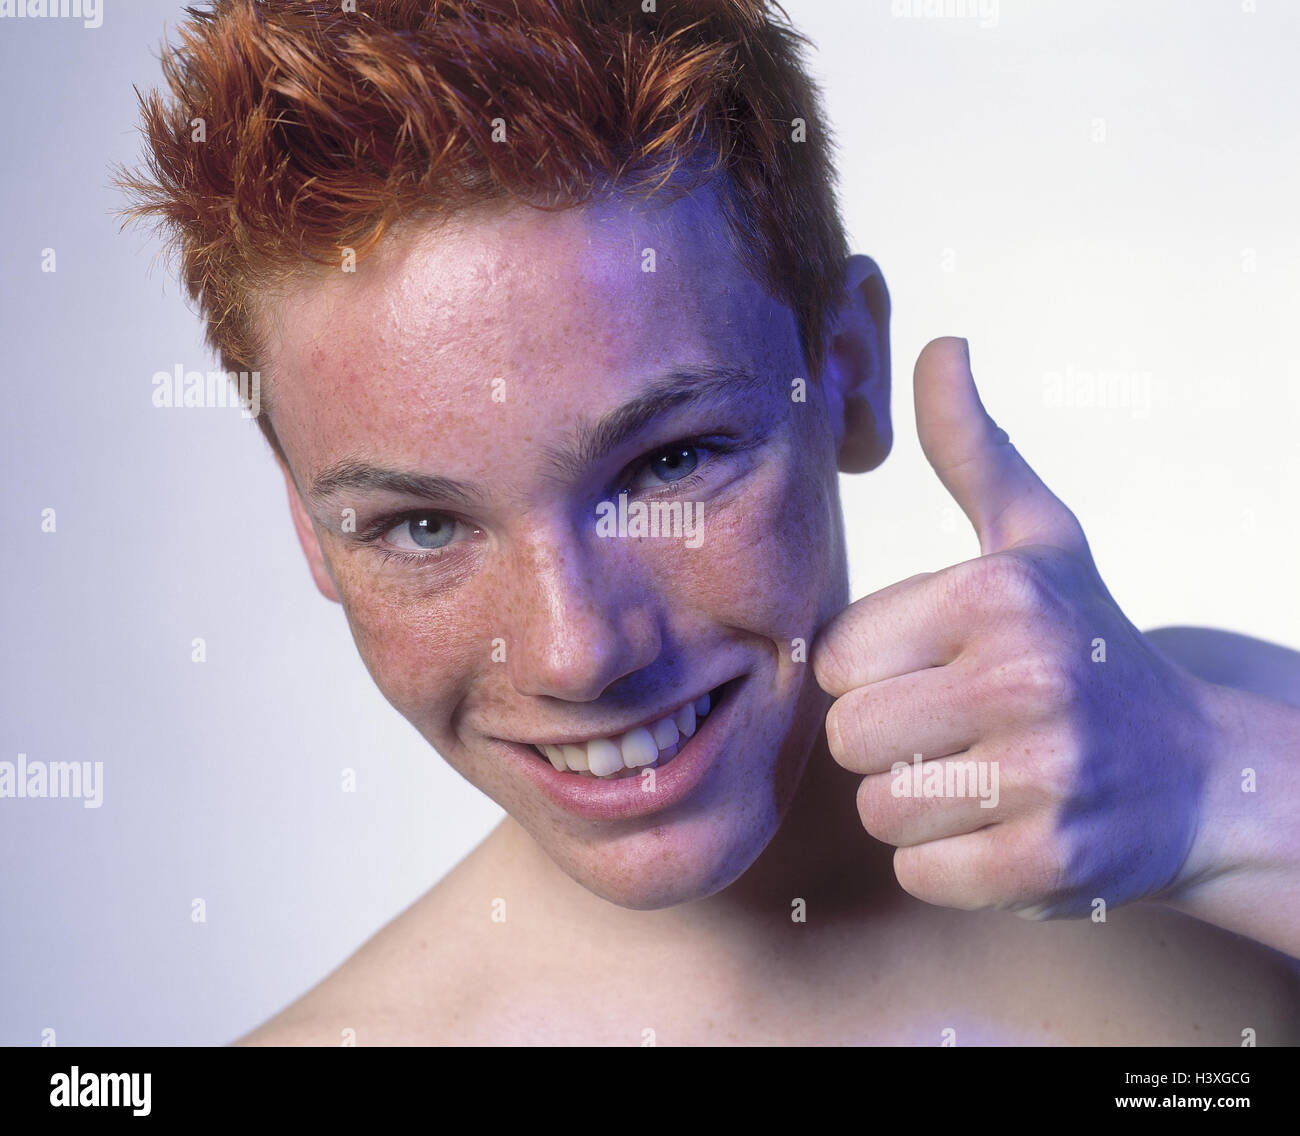 Teen Freckles